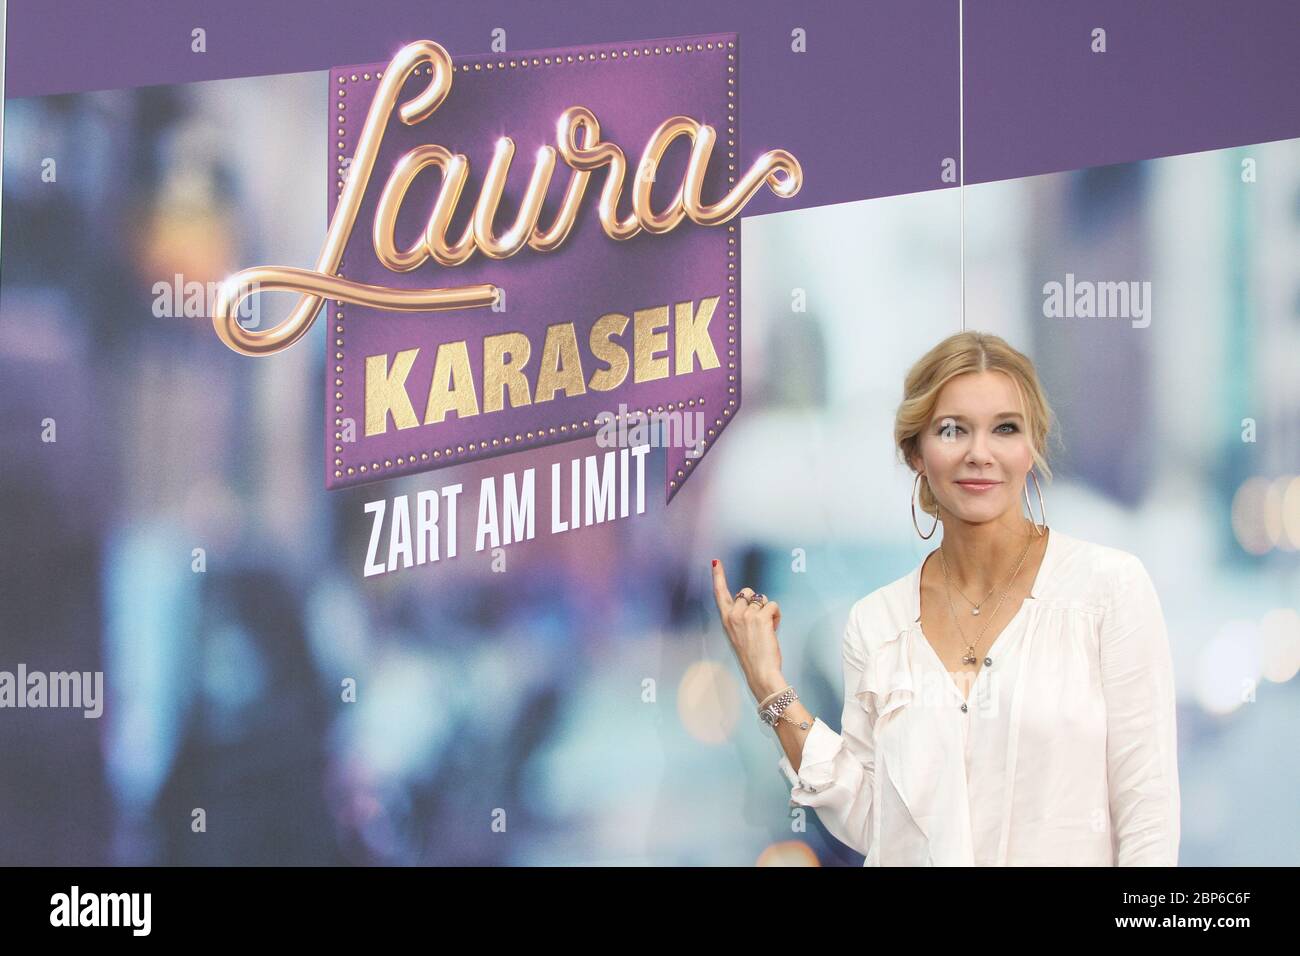 Laura Karasek,Präsentation der neuen Show Zart at the Limit,ZDF Hamburg,16.05.2019 Stockfoto